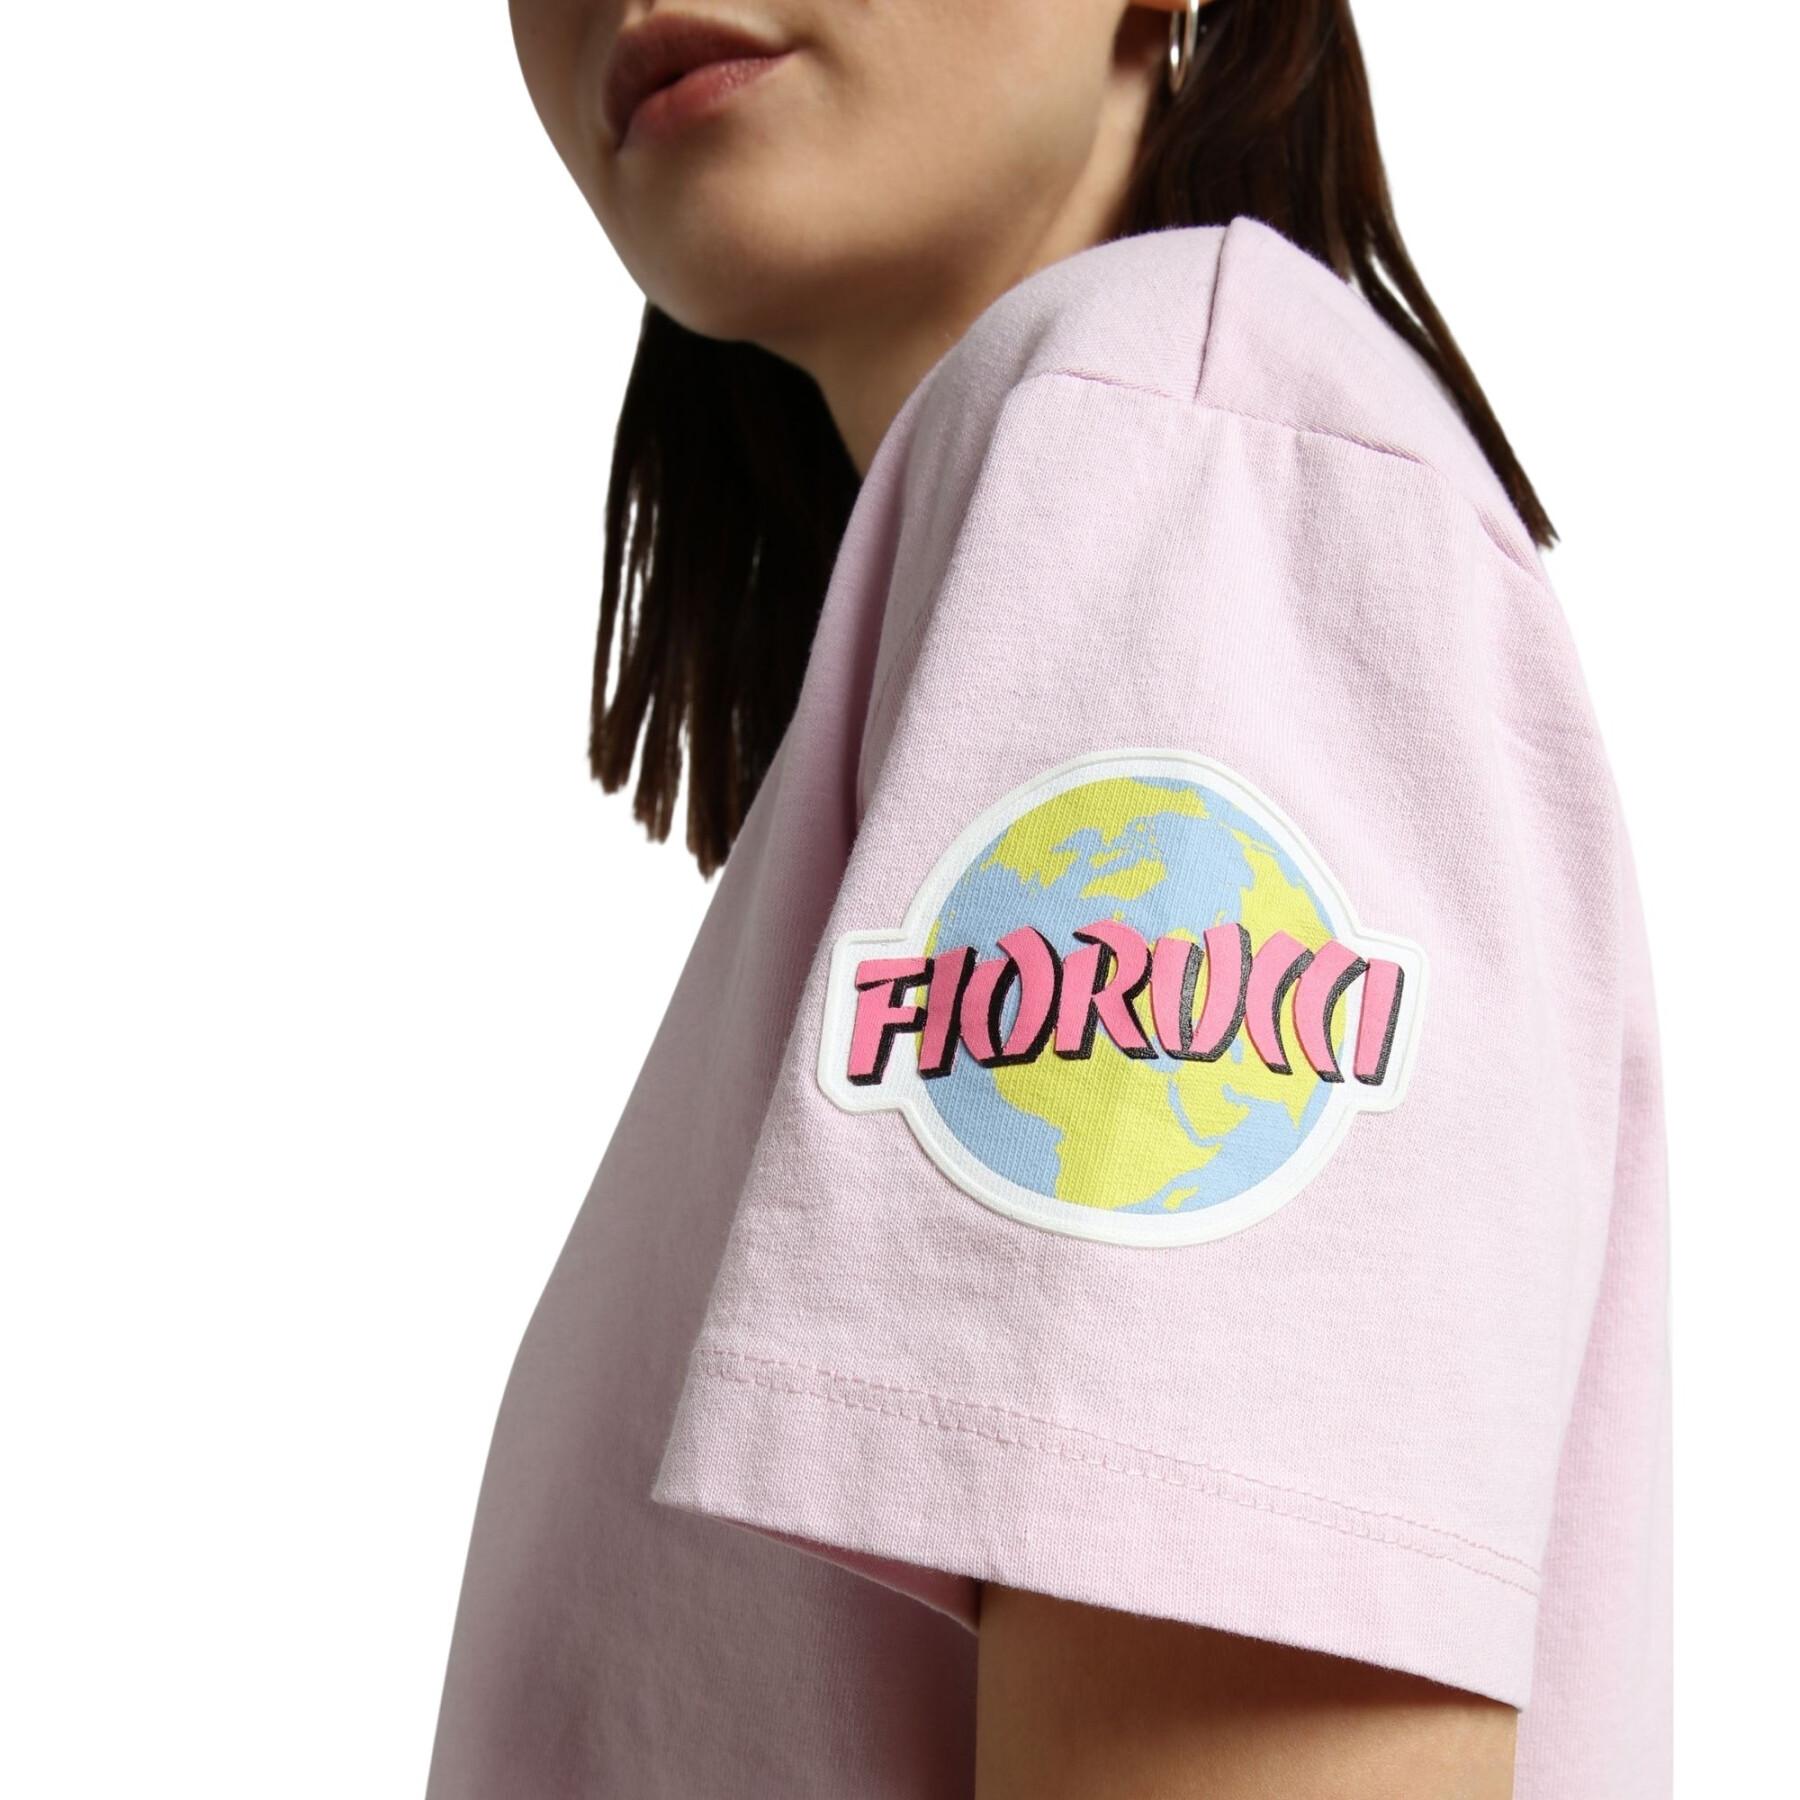 Crop top T-shirt för kvinnor Napapijri S-Fiorucci